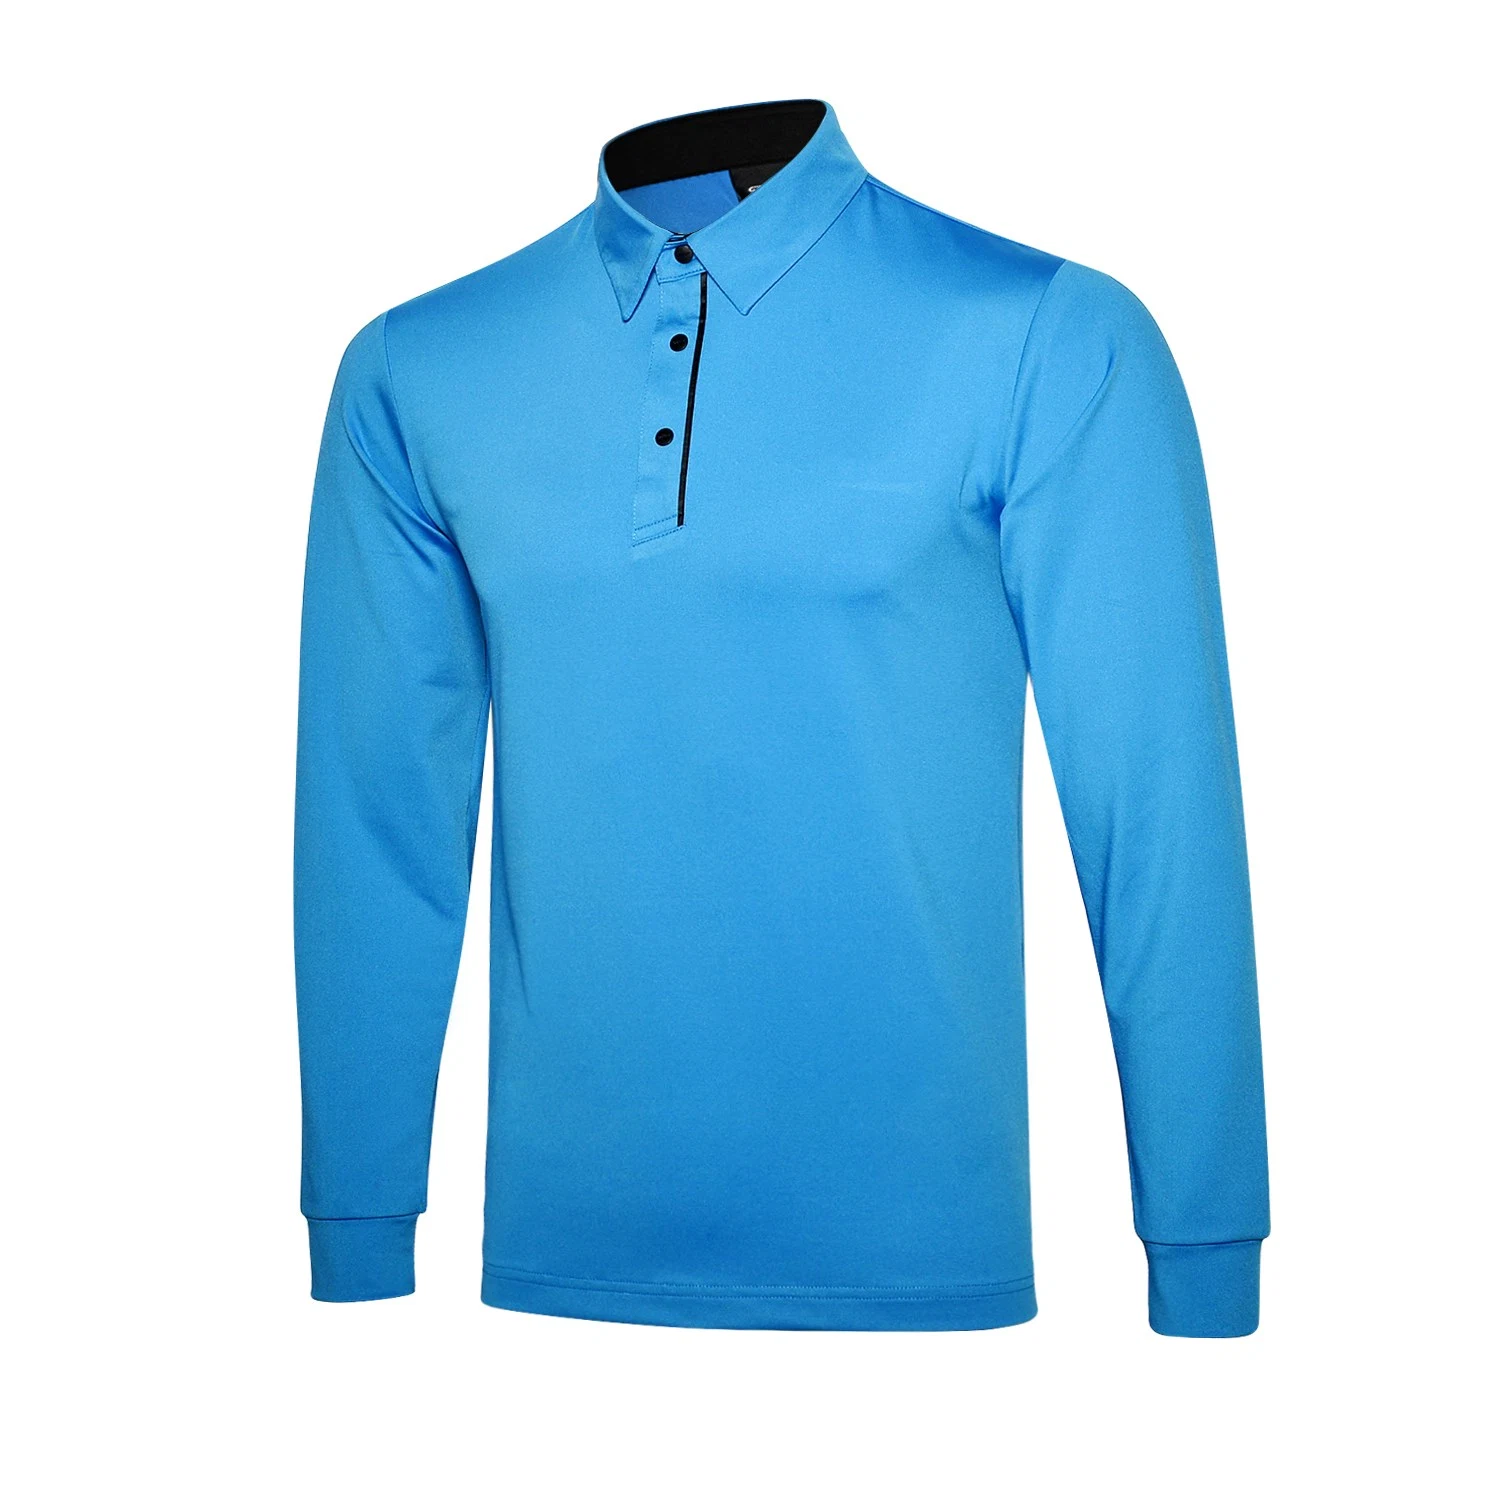 Großhandel/Lieferant Golf Bekleidung Herrenbekleidung Sport Polo Shirt Langarm